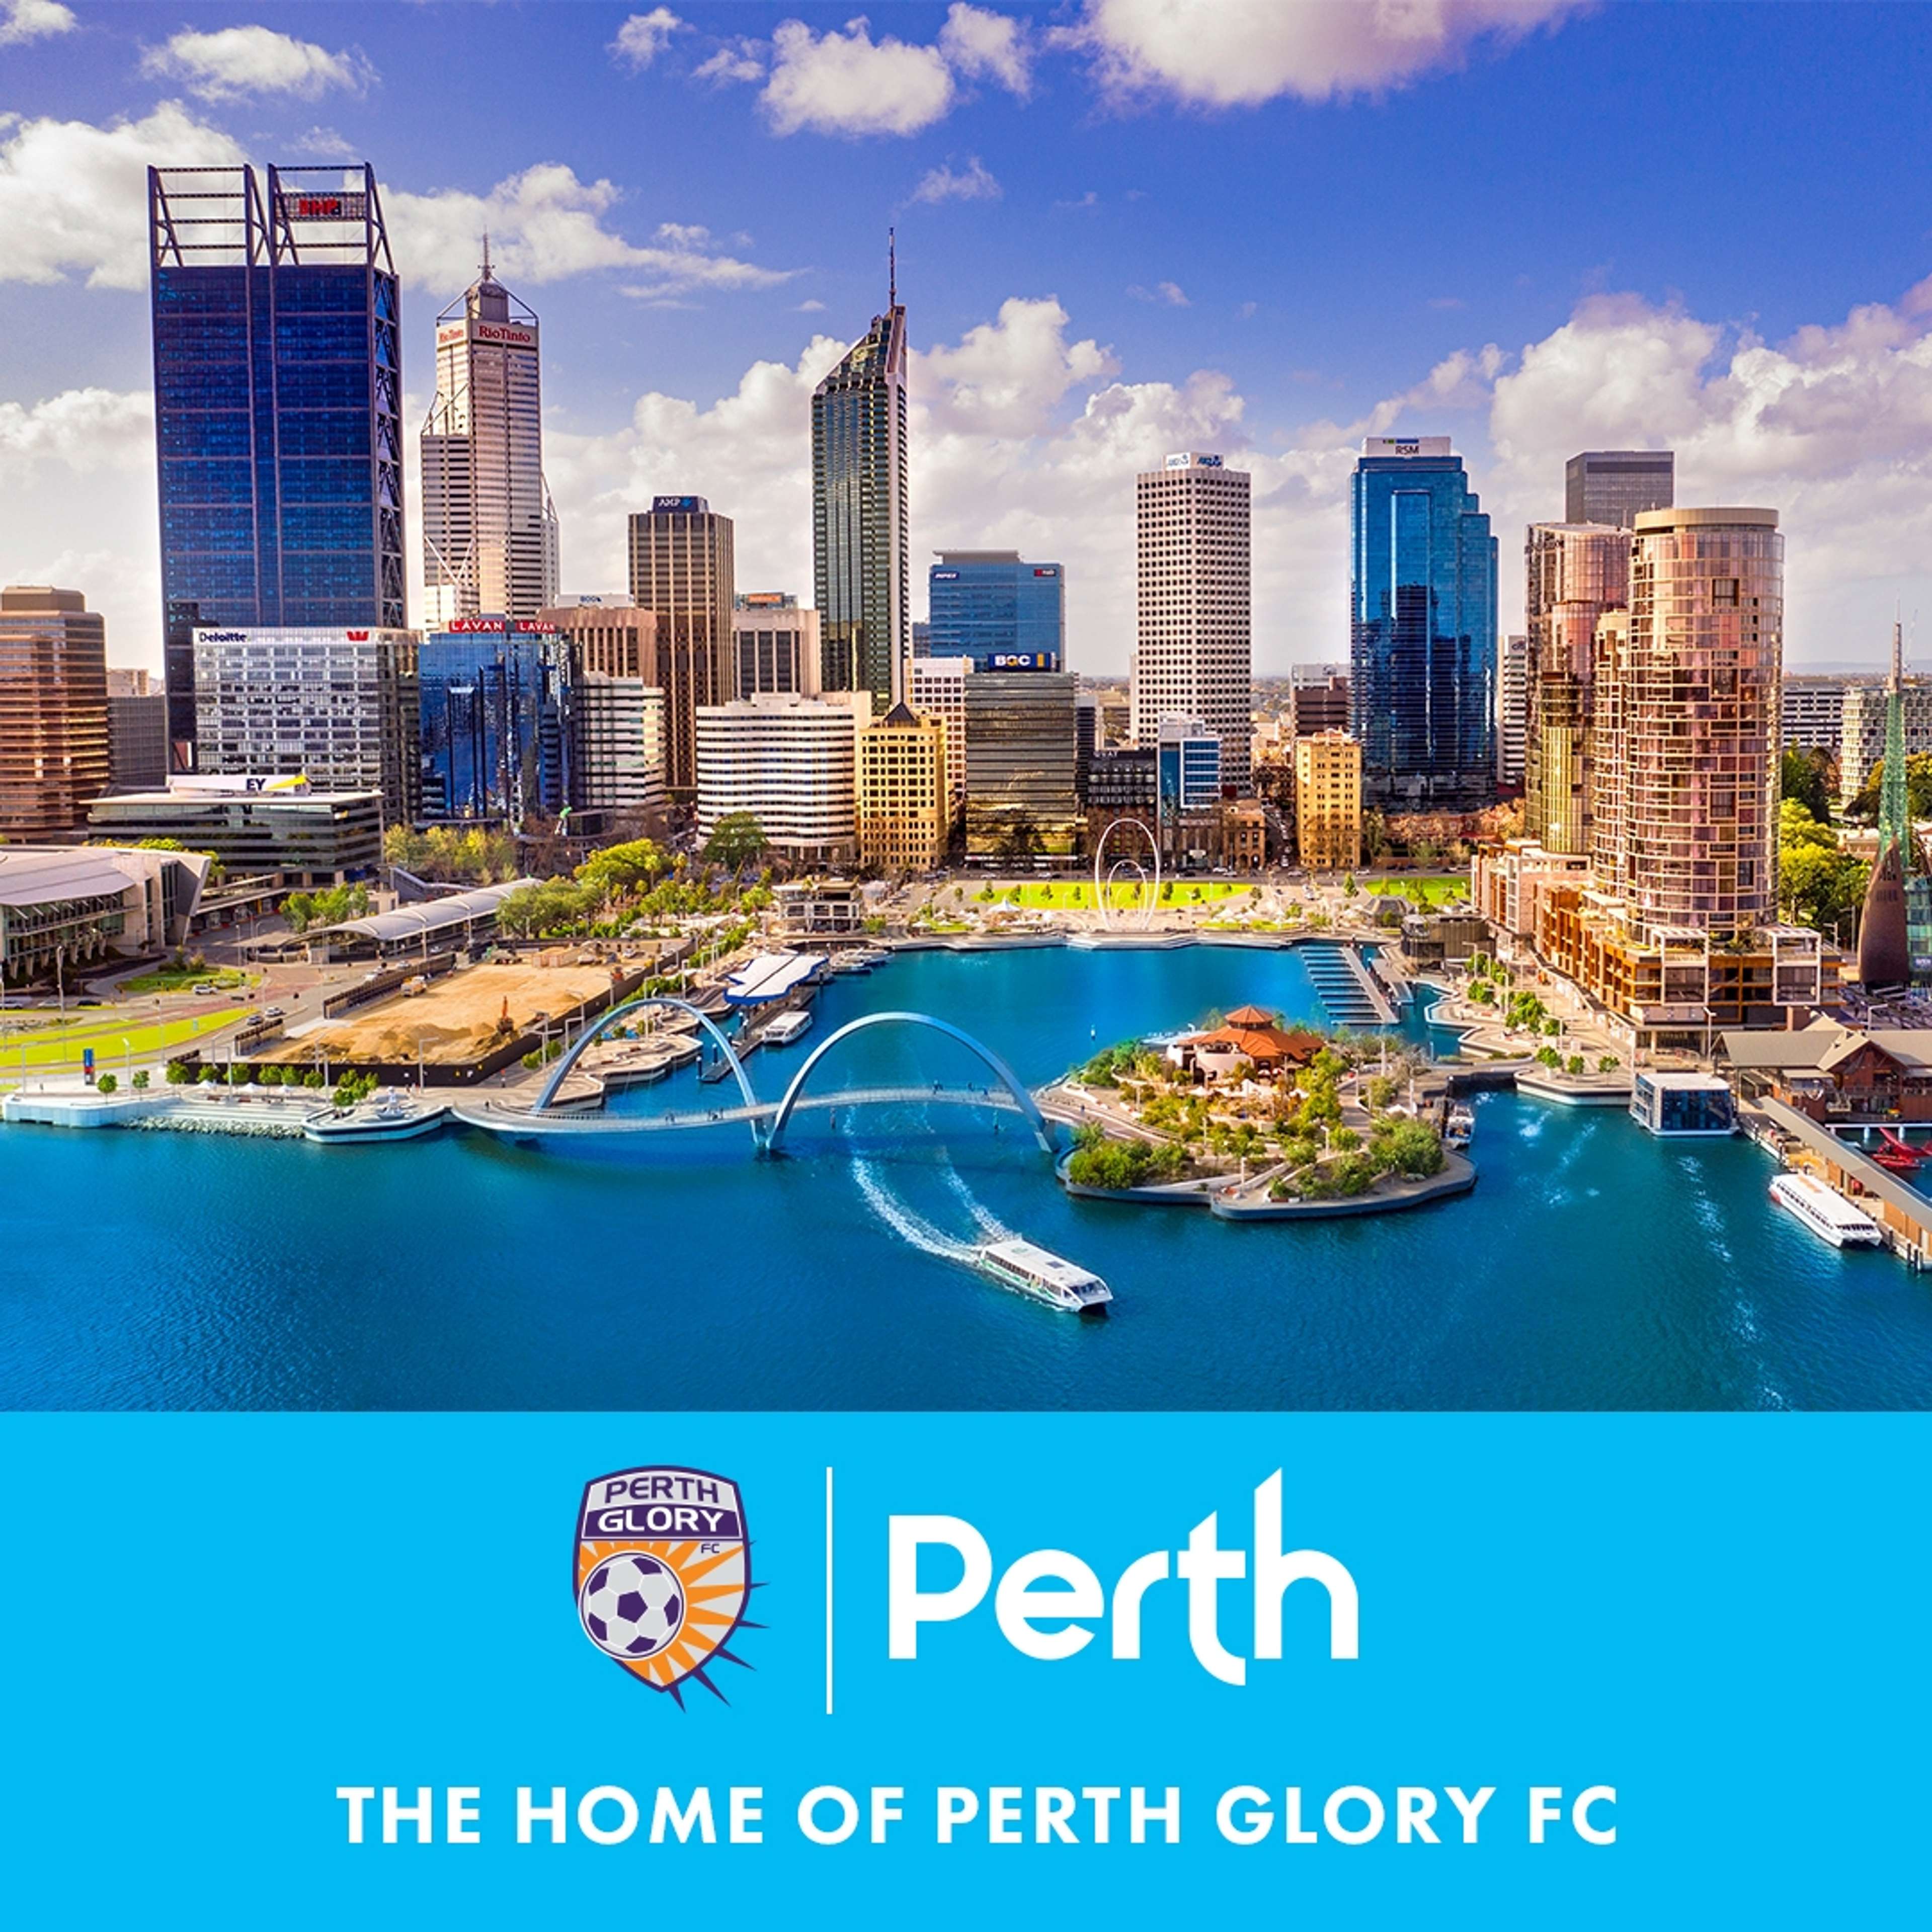 Perth Glory ad